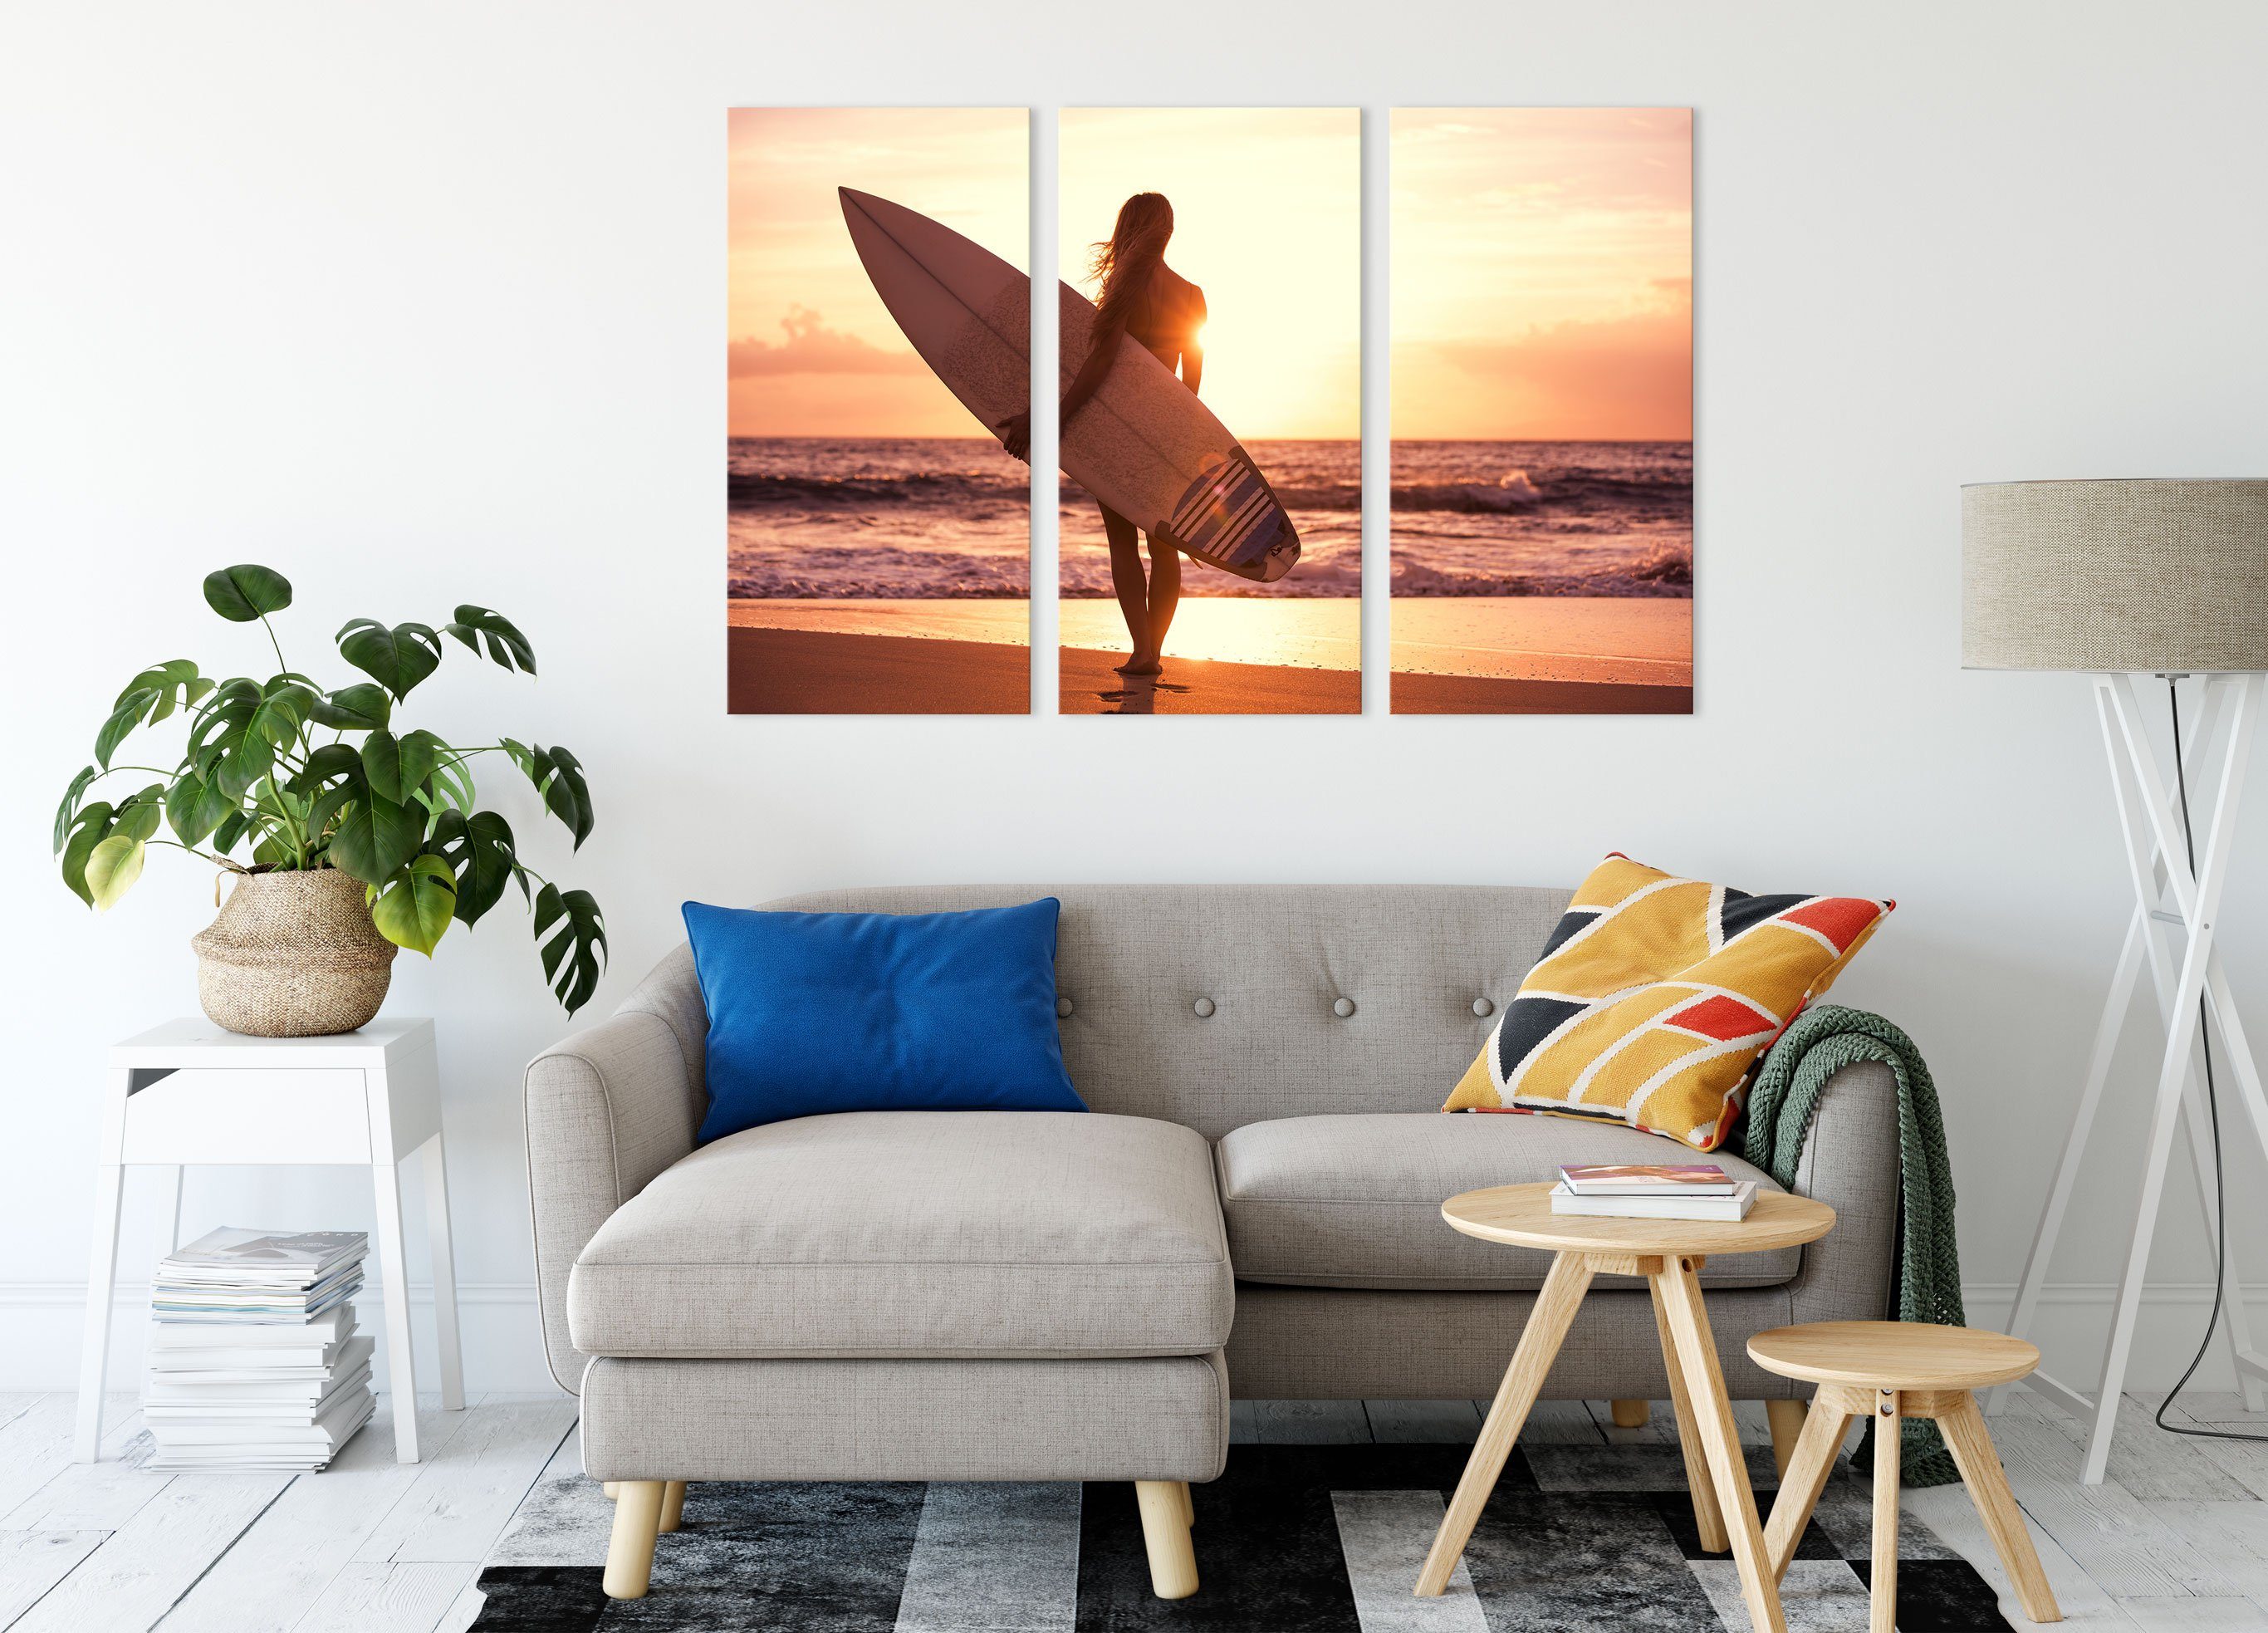 Pixxprint Leinwandbild vor Sonnenuntergang, Zackenaufhänger Sonnenuntergang (1 Surferin Surferin inkl. vor bespannt, St), (120x80cm) Leinwandbild fertig 3Teiler